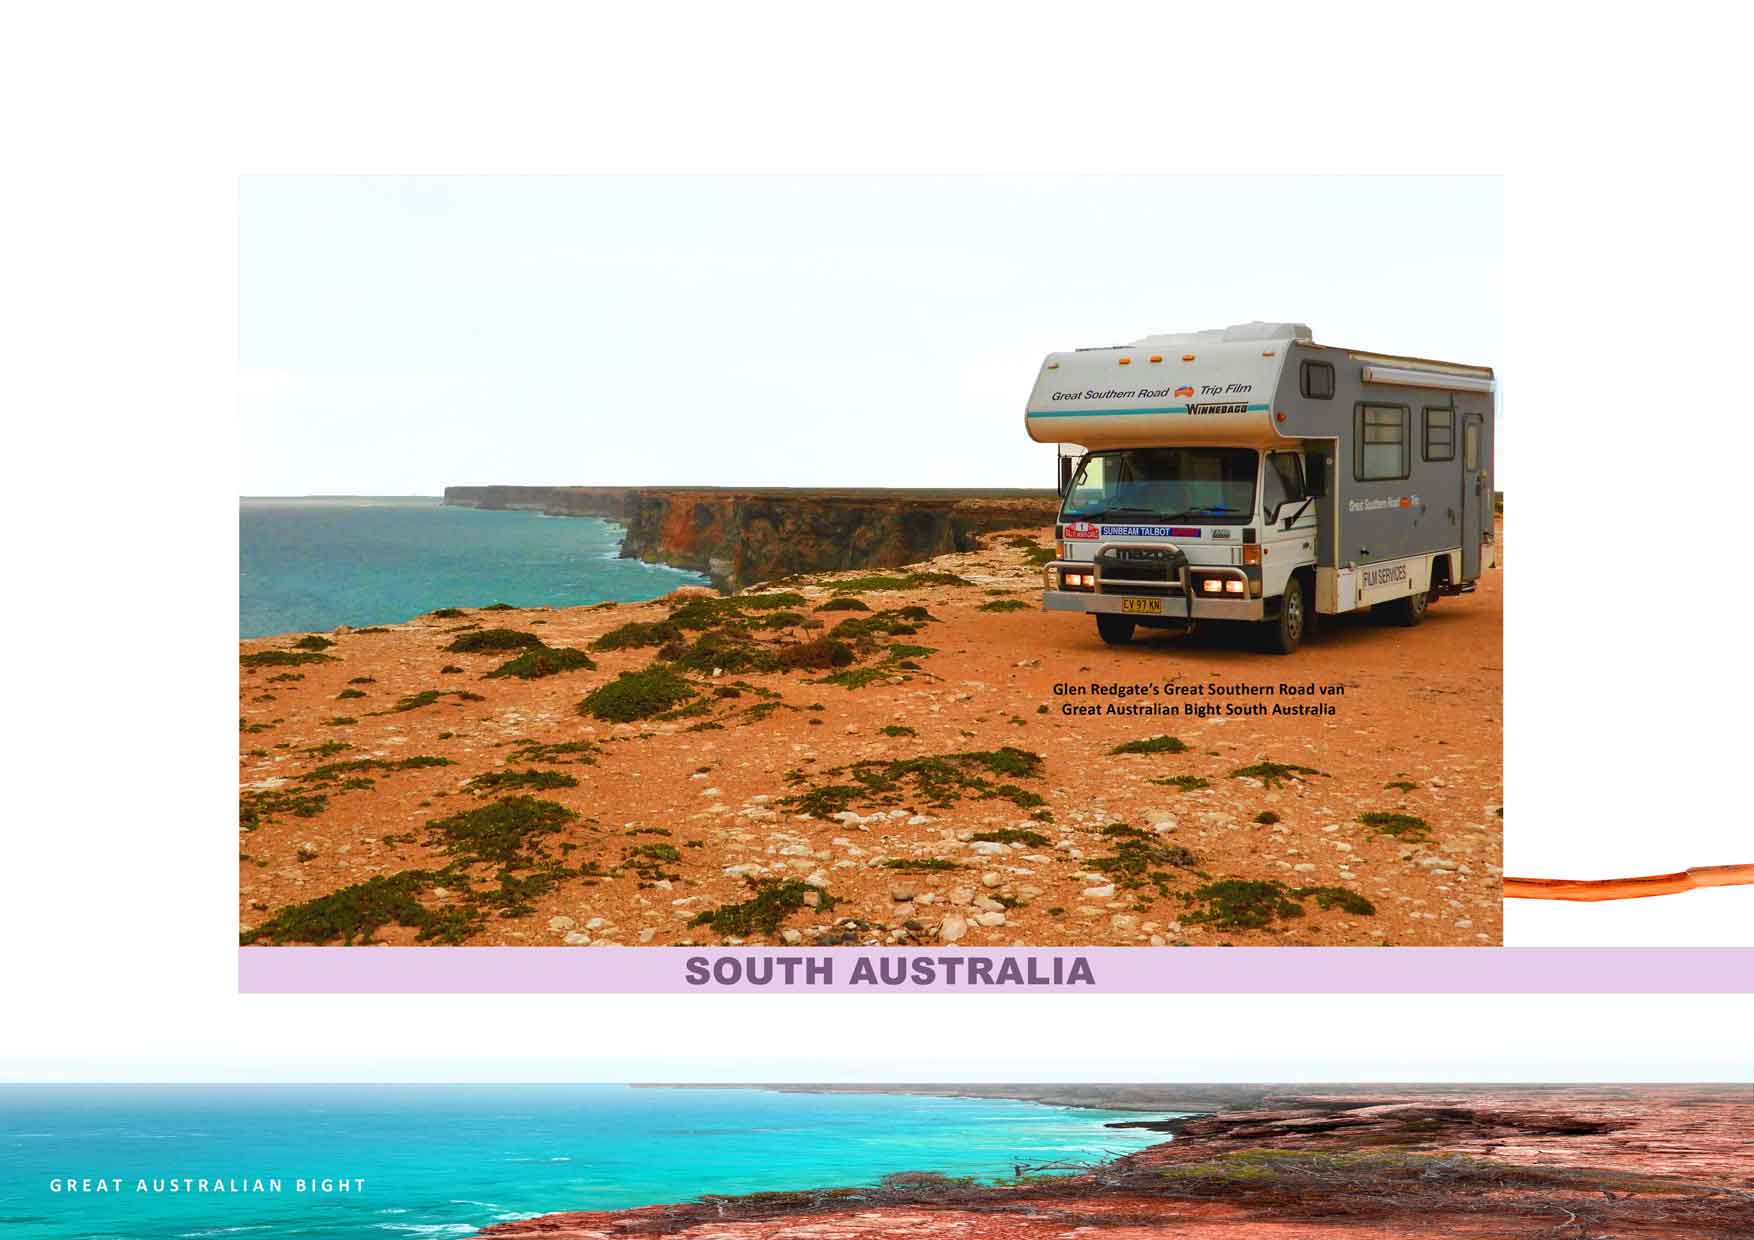 Great Southern Road - Great Australian Bight